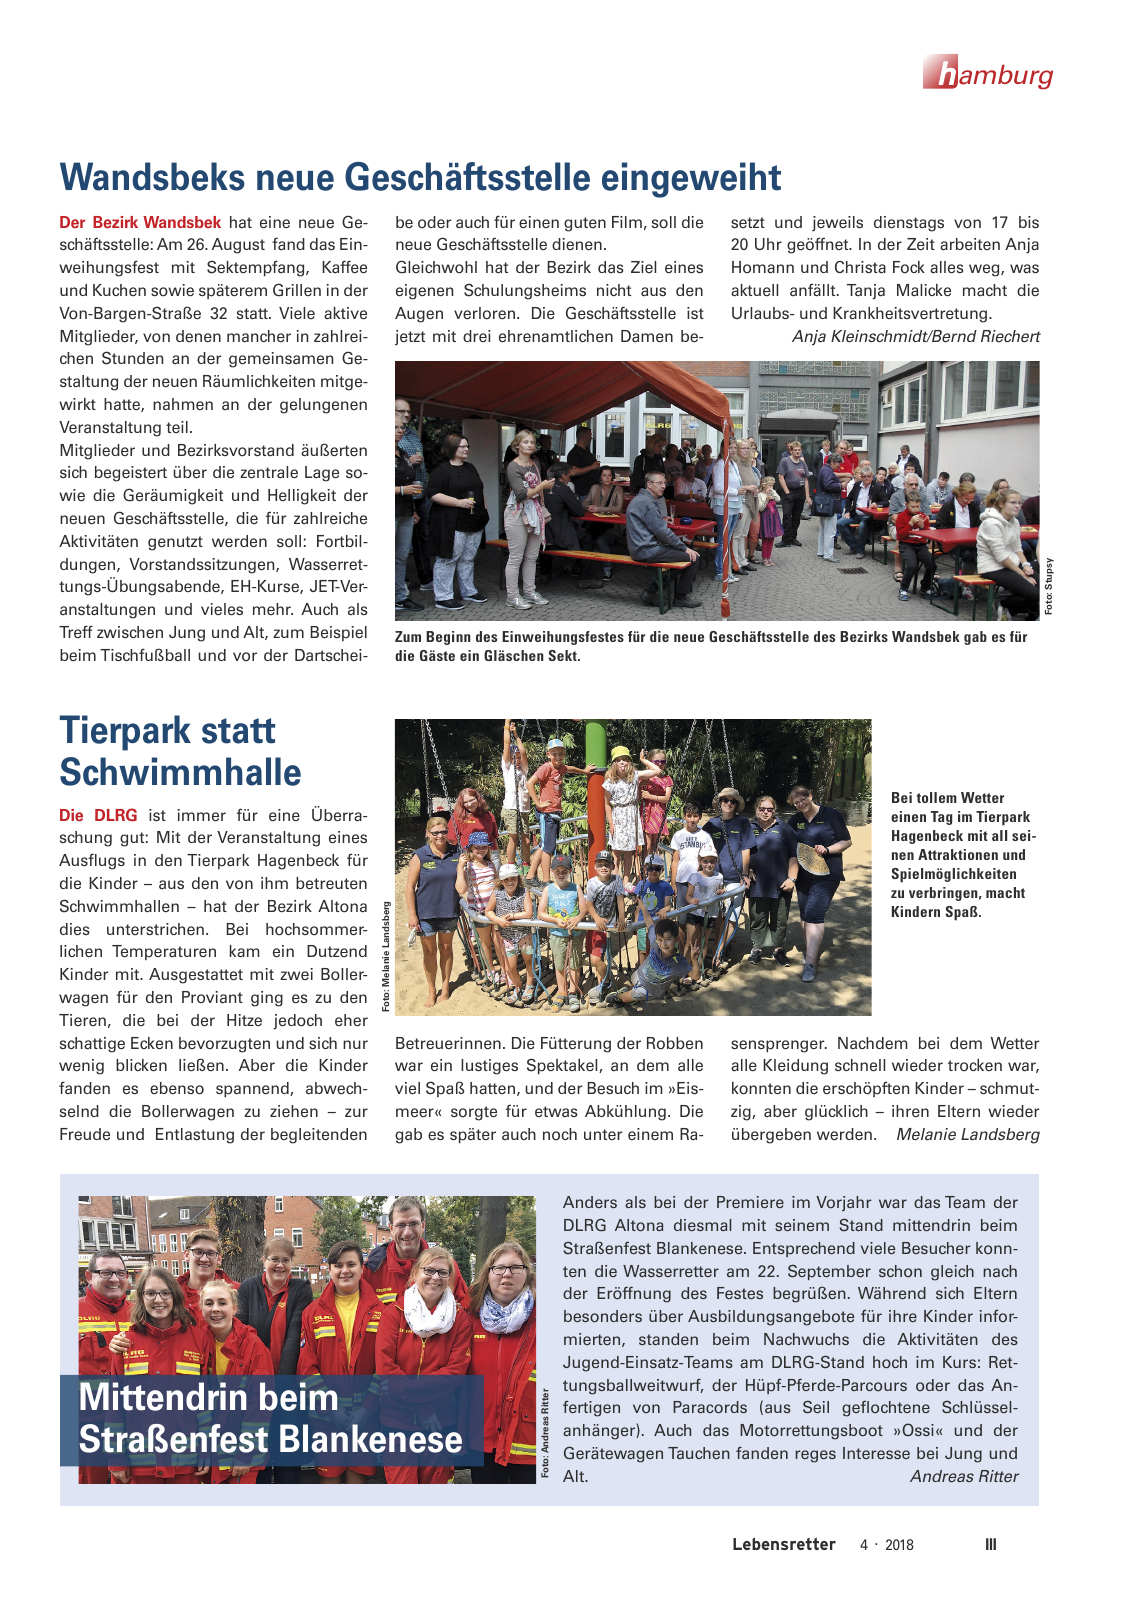 Vorschau Lebensretter 4/2018 - Regionalausgabe Hamburg Seite 5